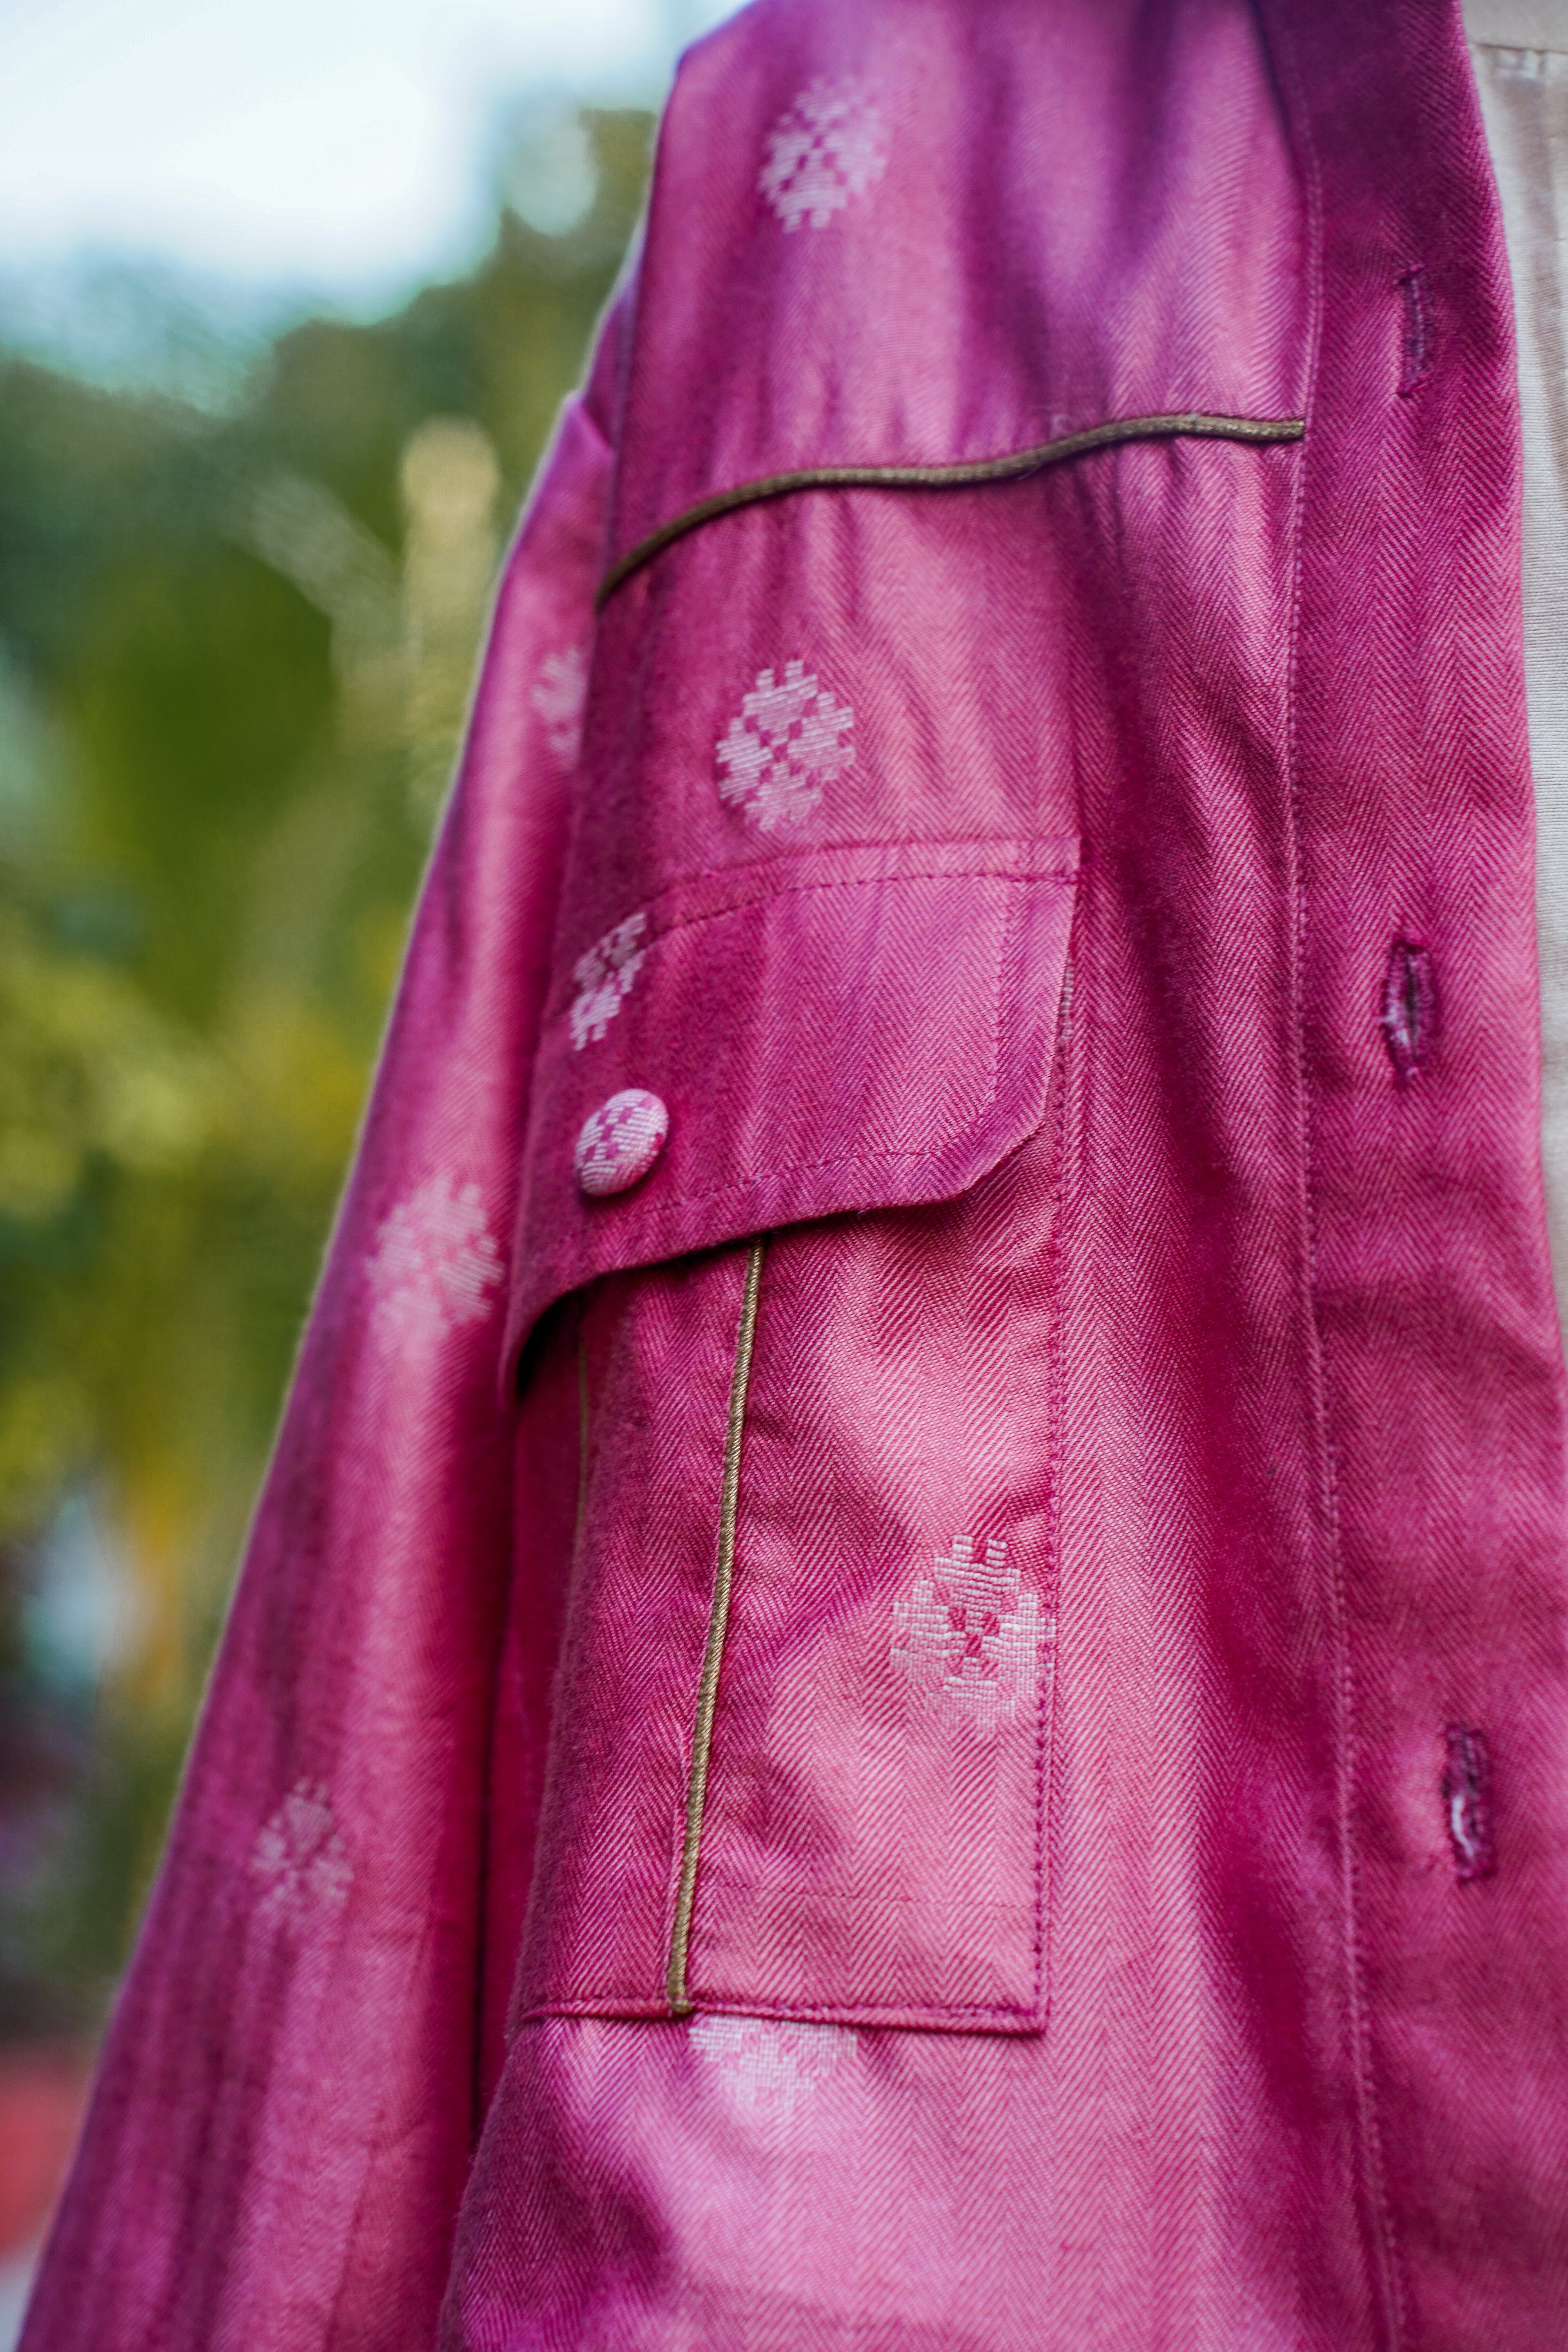 Pink Panache: Unisex Loose Fit Jacket & Ethnic Set for Kids